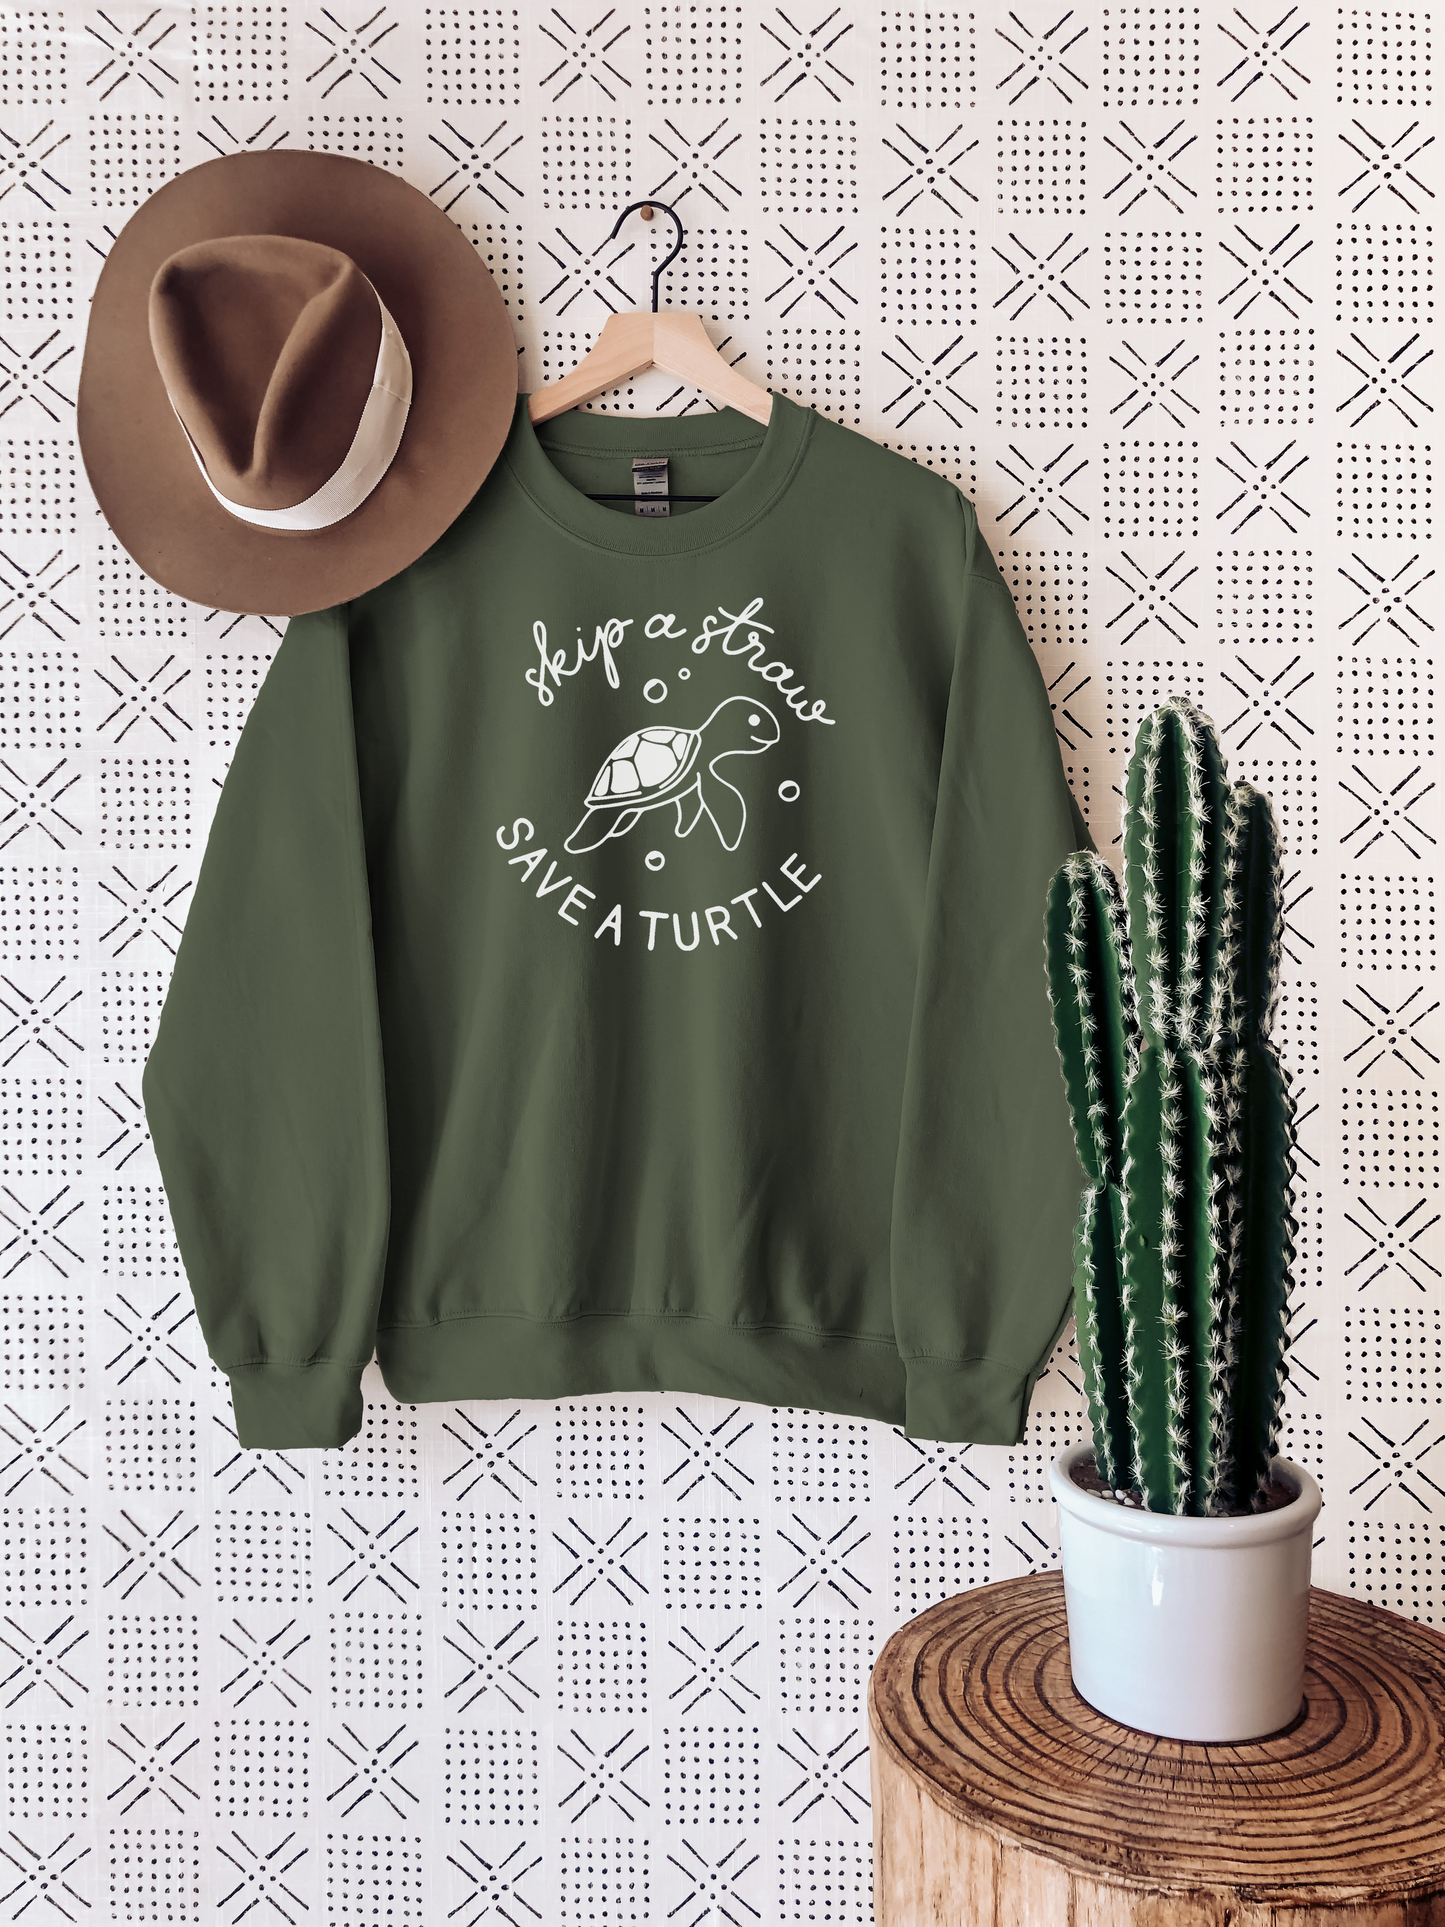 Save a Turtle Sweatshirt